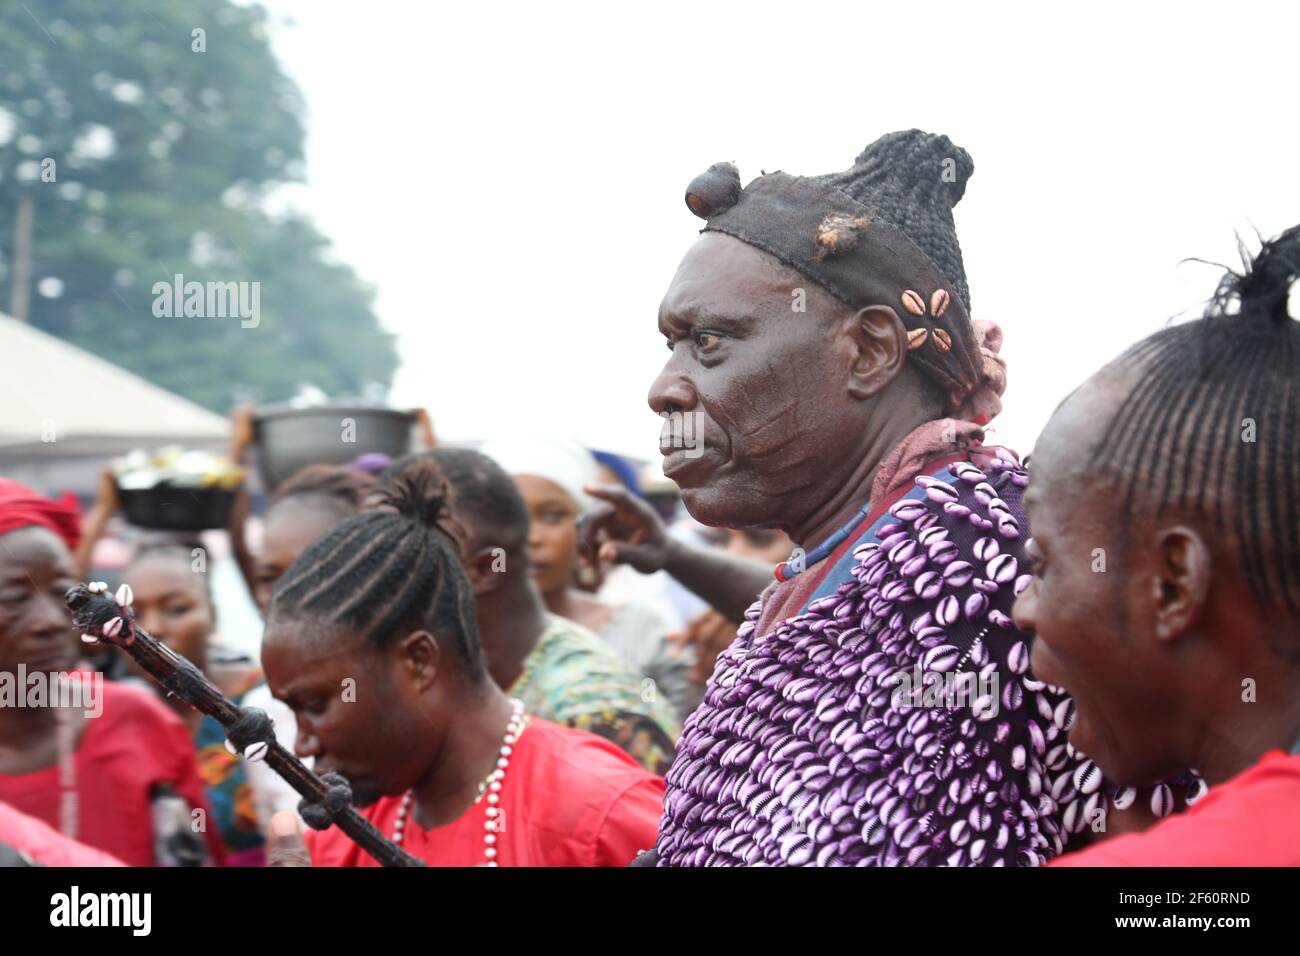 Elegun Sango pendant le Festival mondial de Sango, État d'Oyo, Nigeria. Banque D'Images